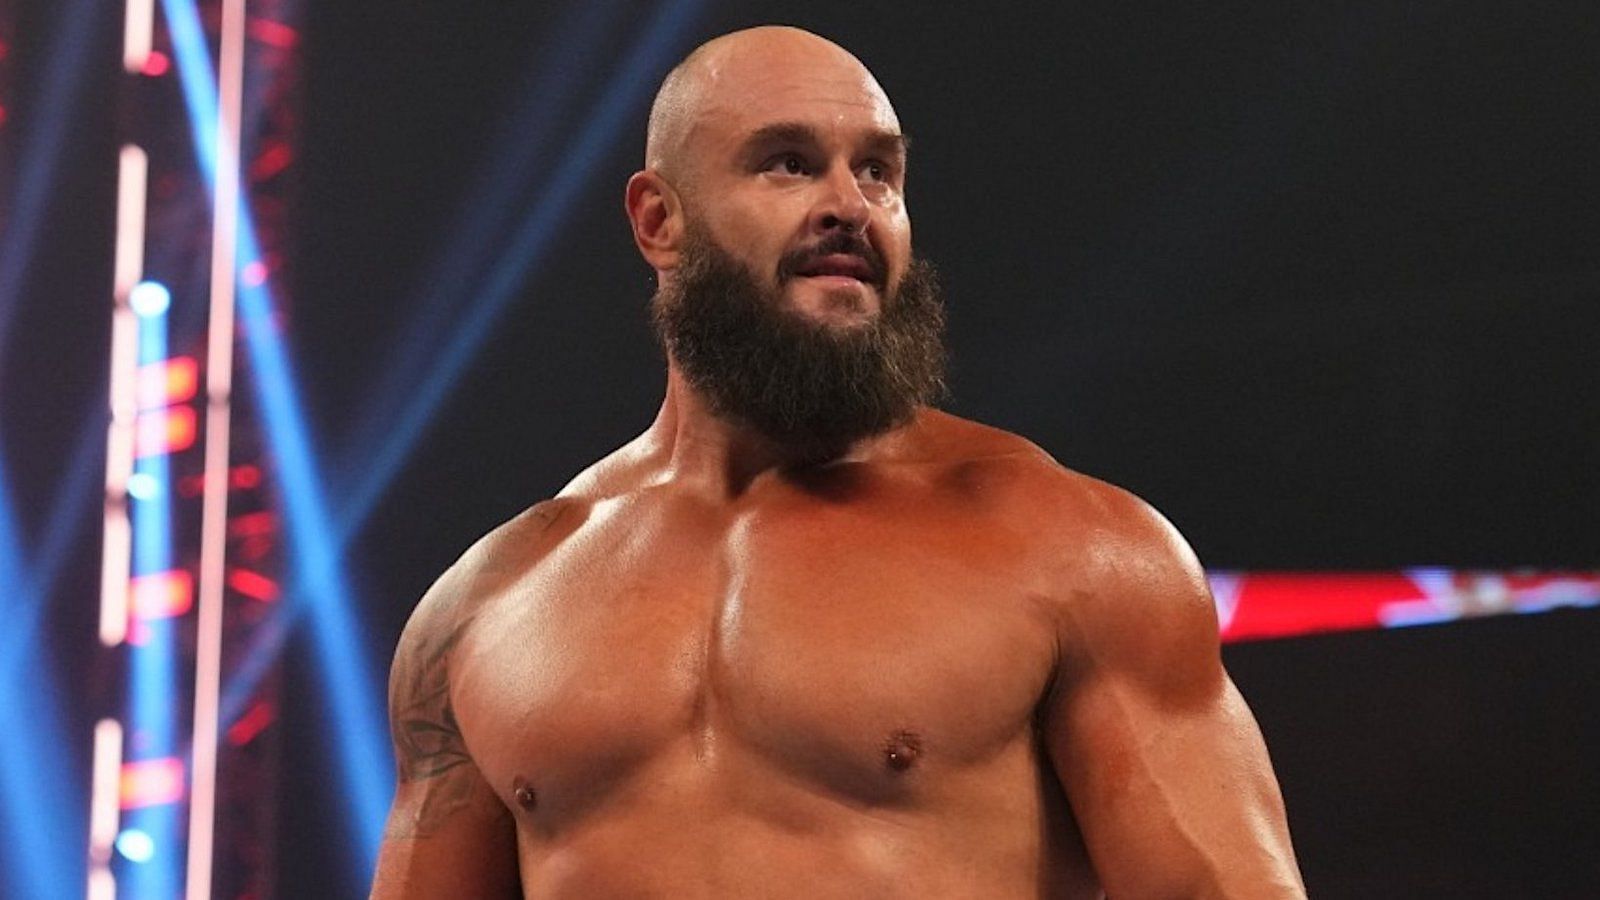 Strowman returned to WWE last fall.